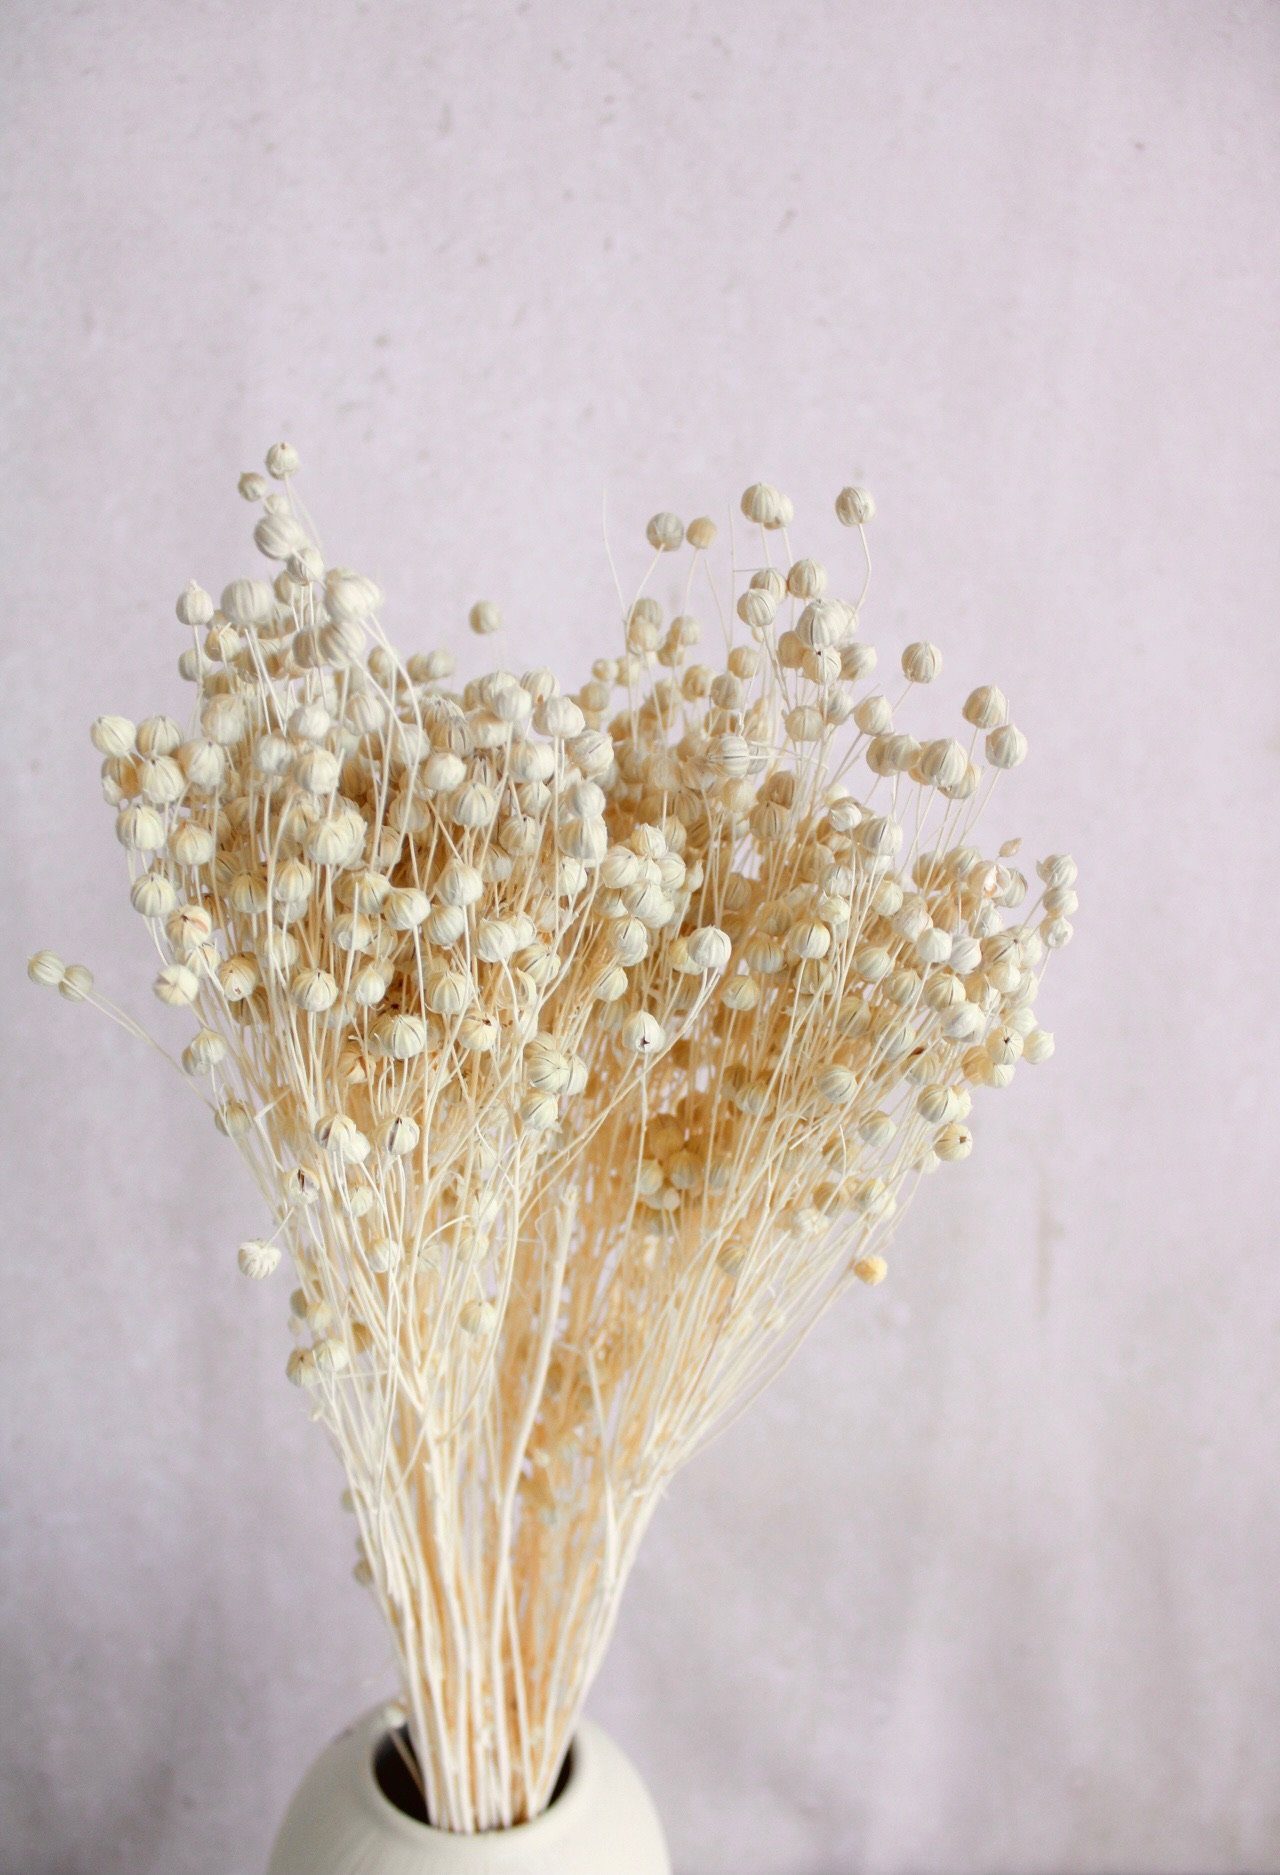 Vasenglück oder getrockneter natur Trockenblumen, in cremeweiß Flachs Trockenblume